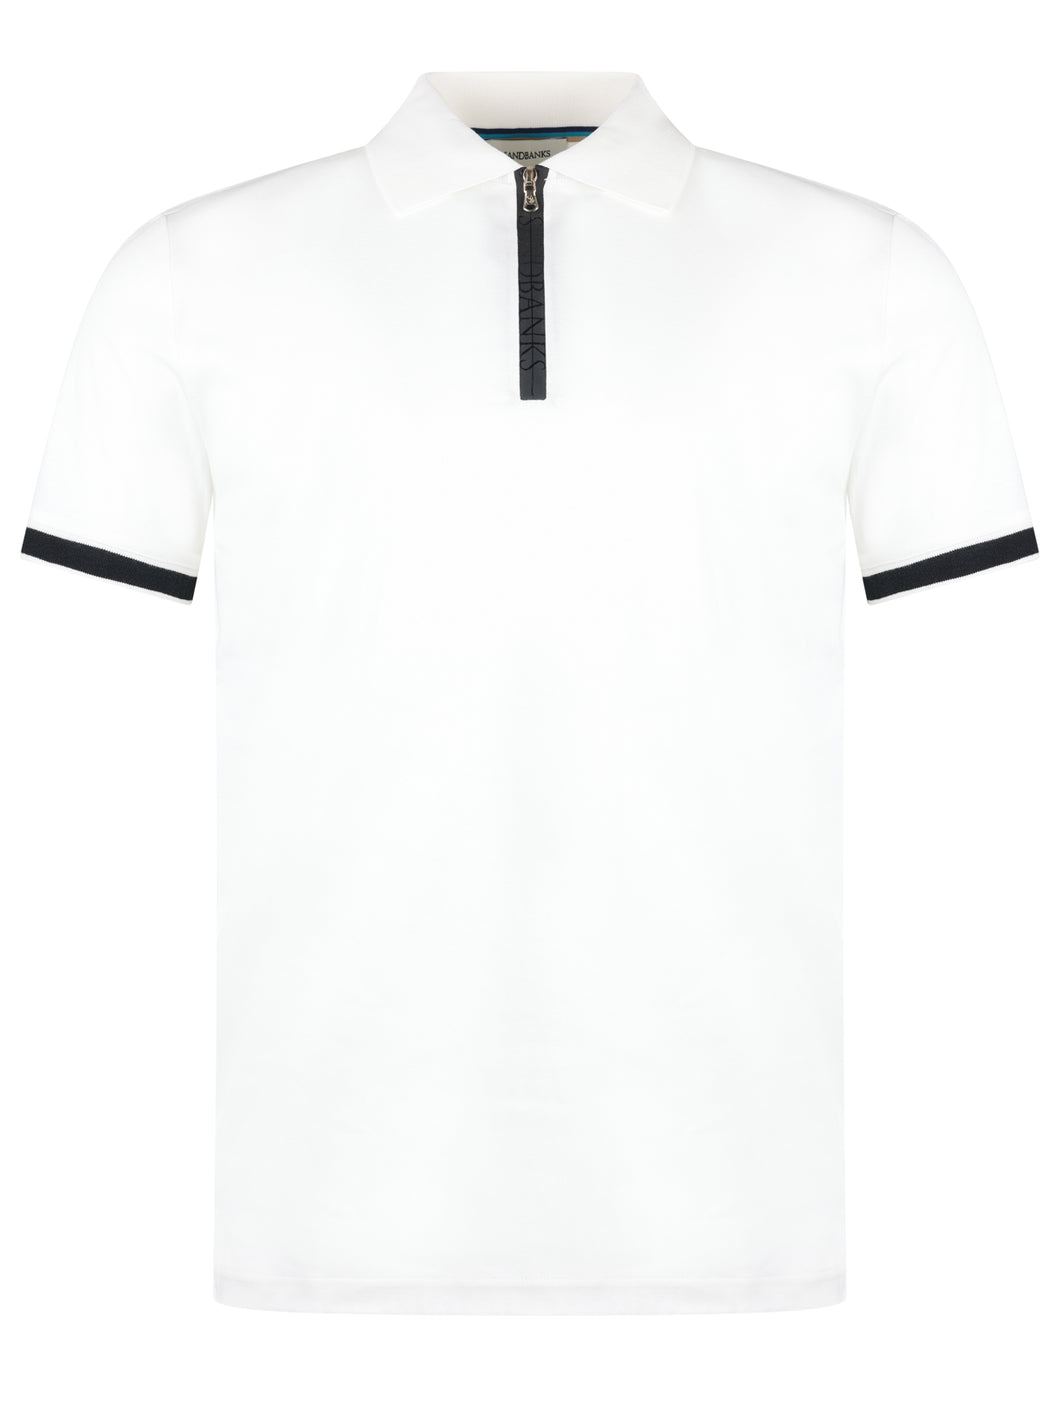 Sandbanks Silicone Zip Polo Shirt White